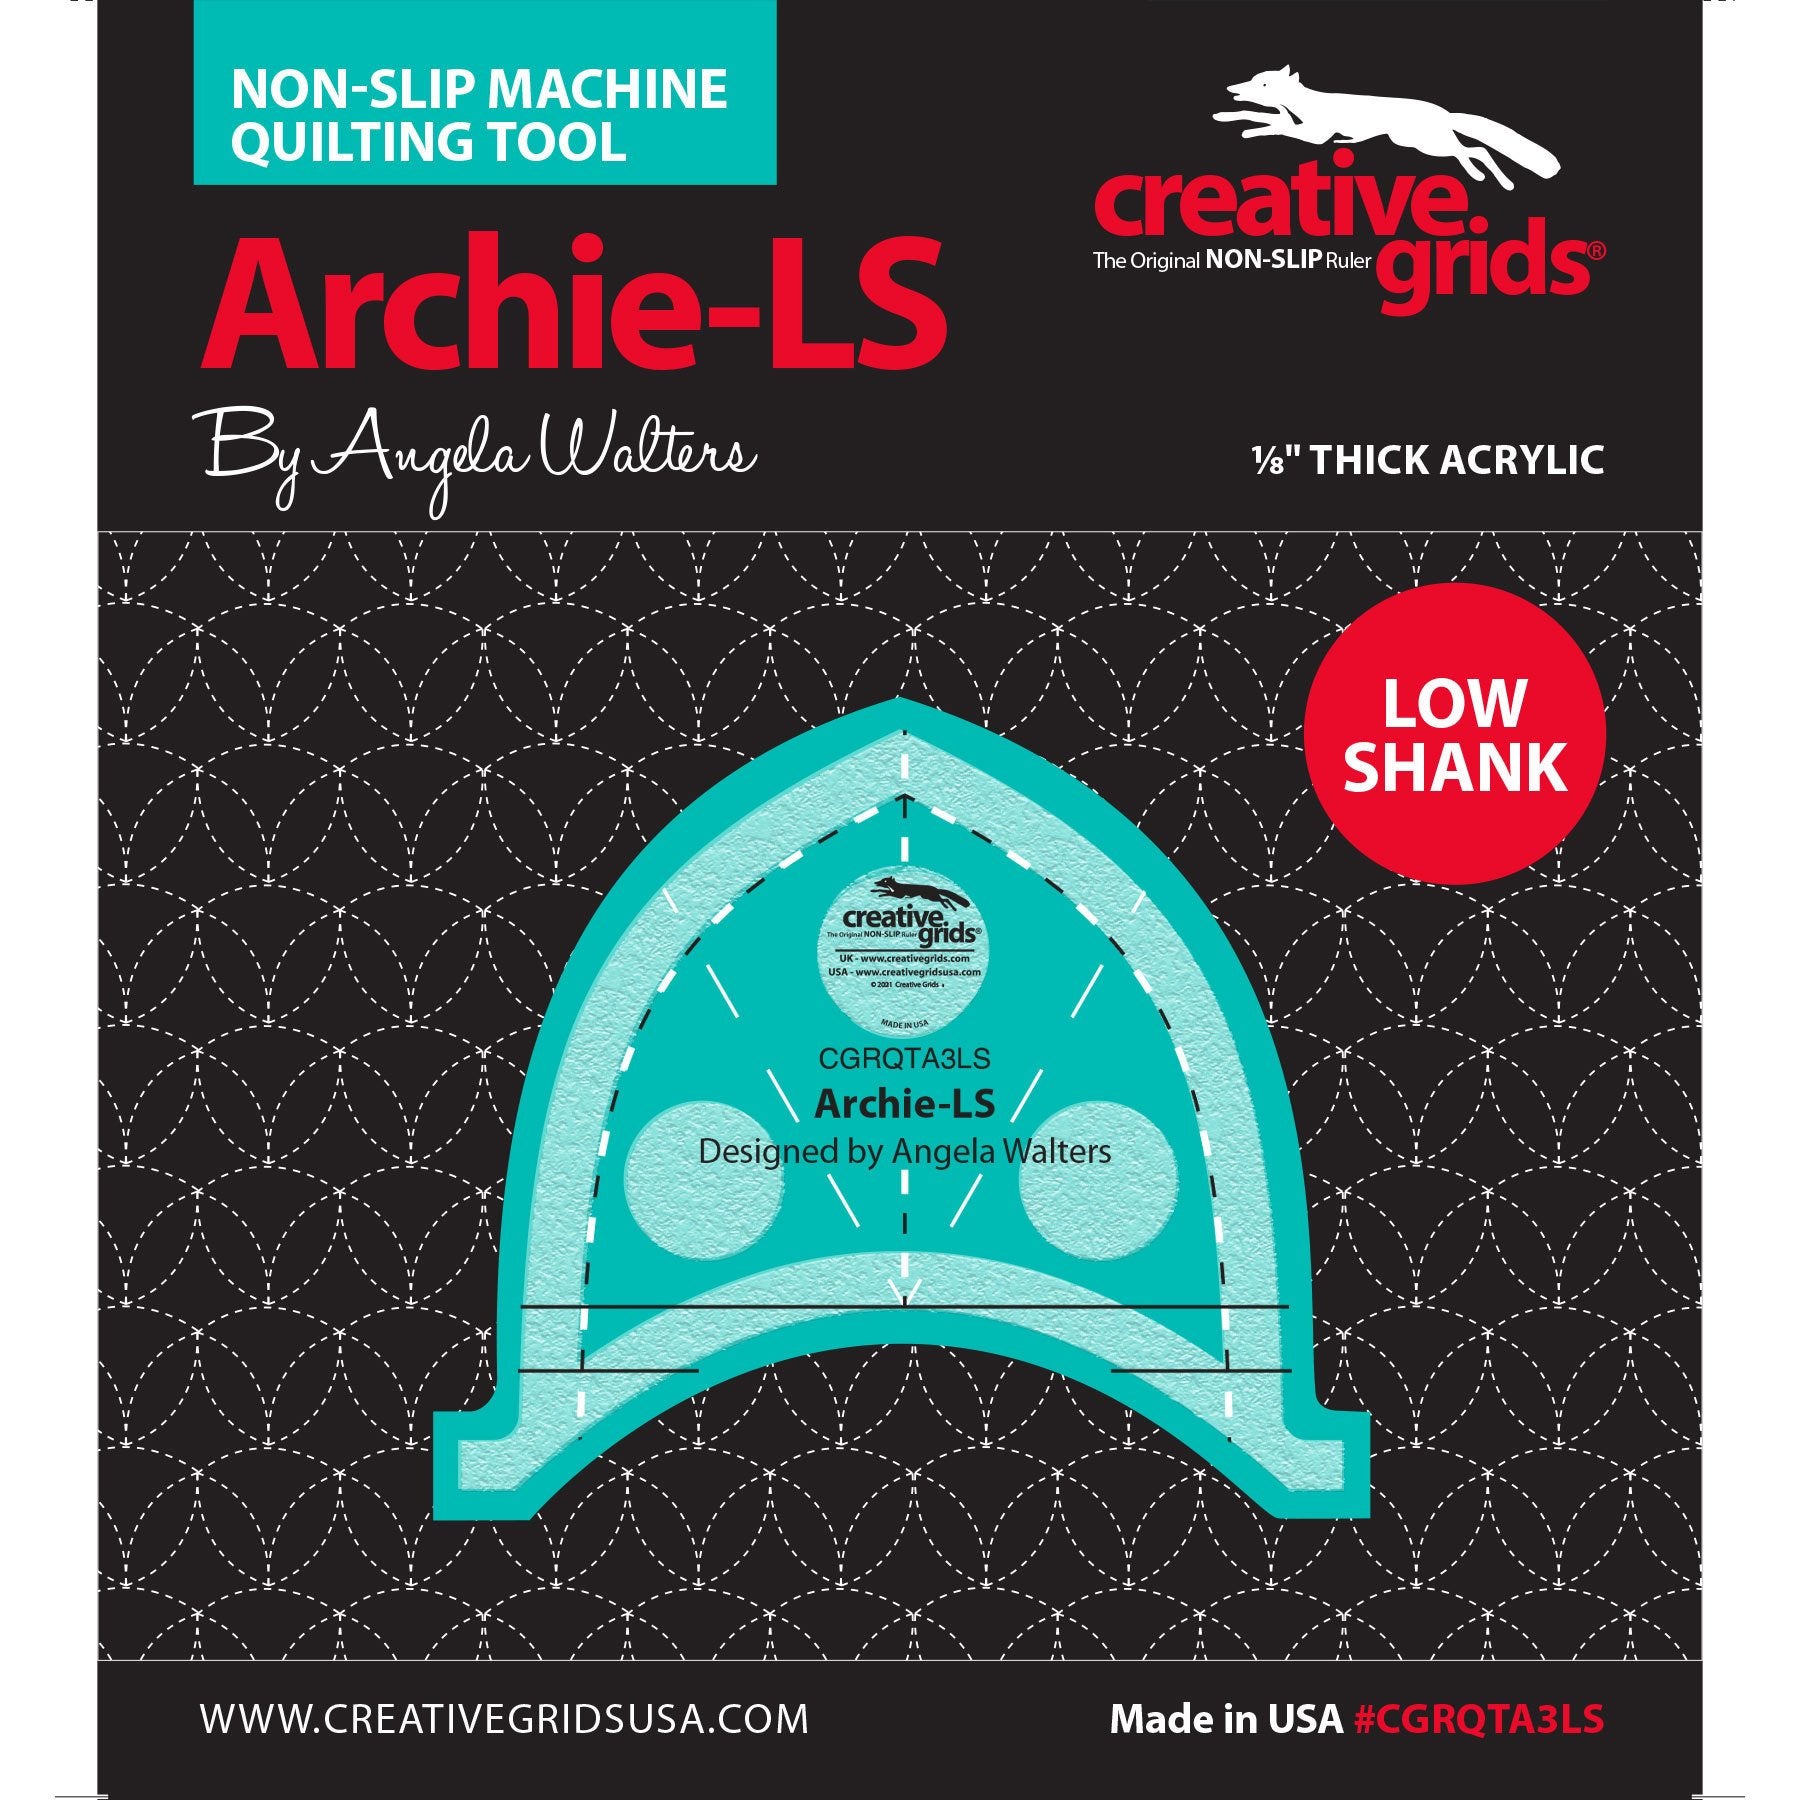 Creative Grids Low Shank Machine Archie Machine Quilting Tool CGRQTA3LS for Sale at World Weidner